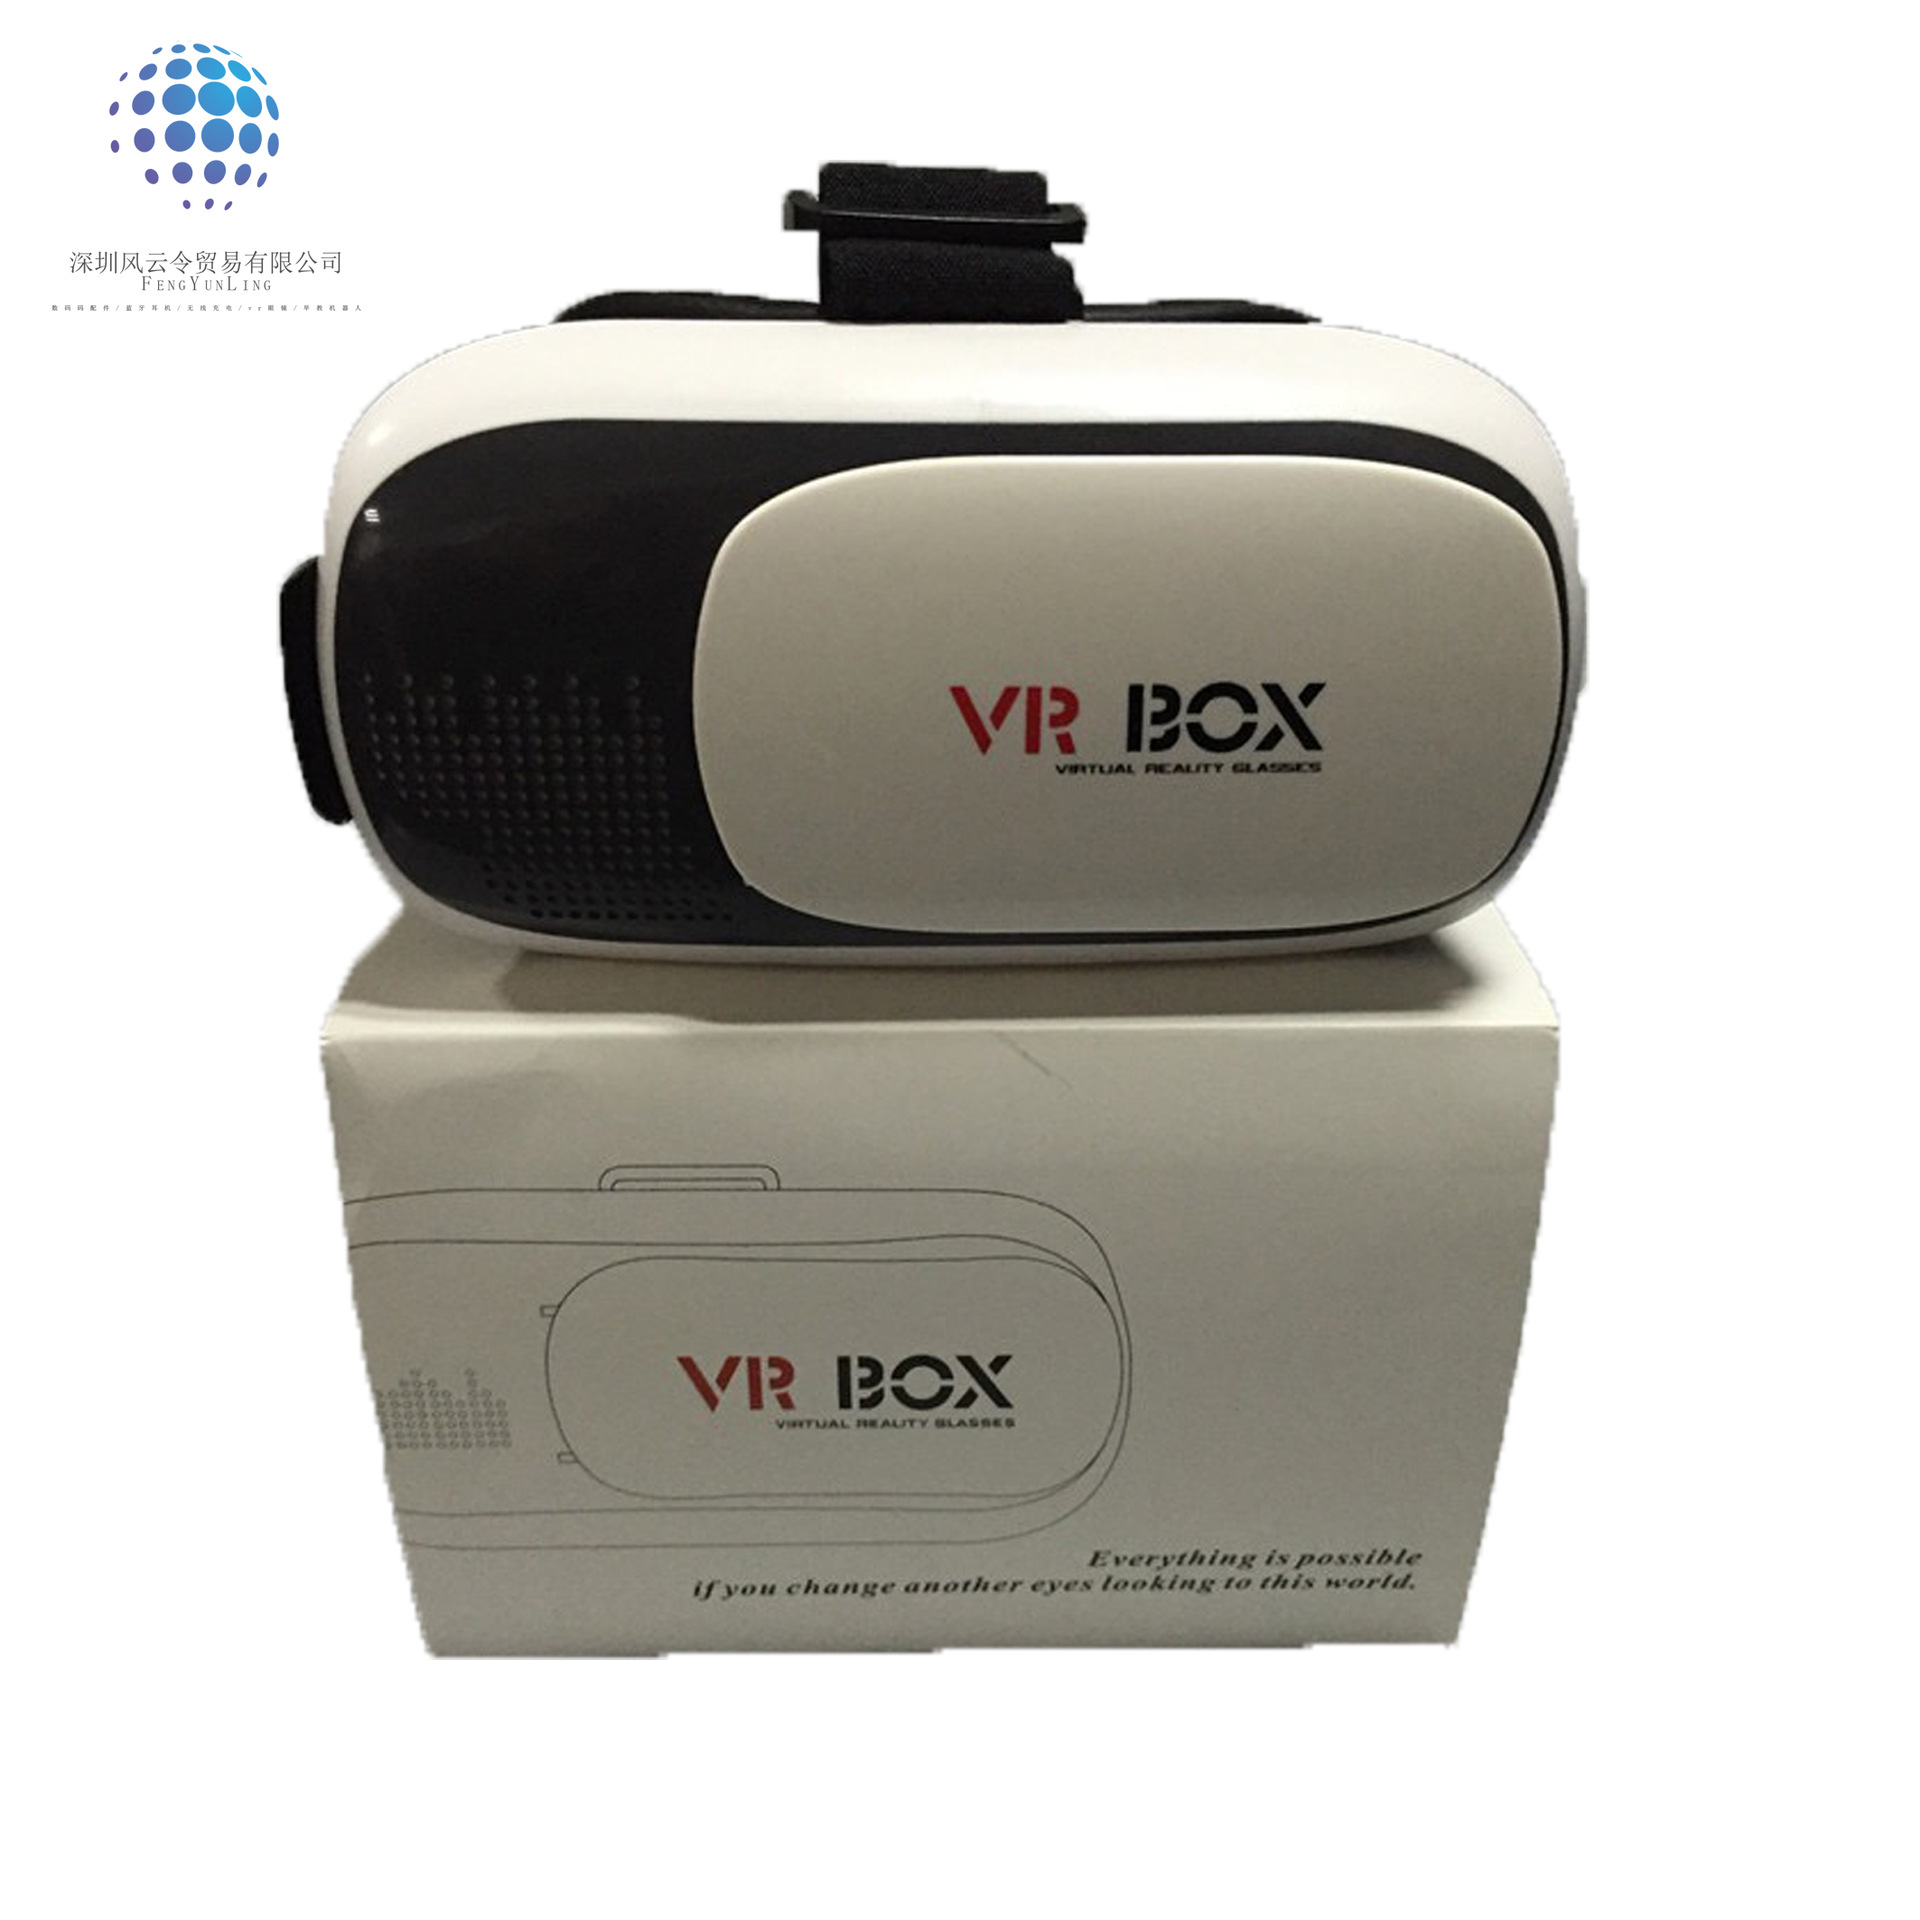 VR-BOX 二代 头戴智能游戏眼镜  VR眼镜 手机立体影院3D眼镜 超清